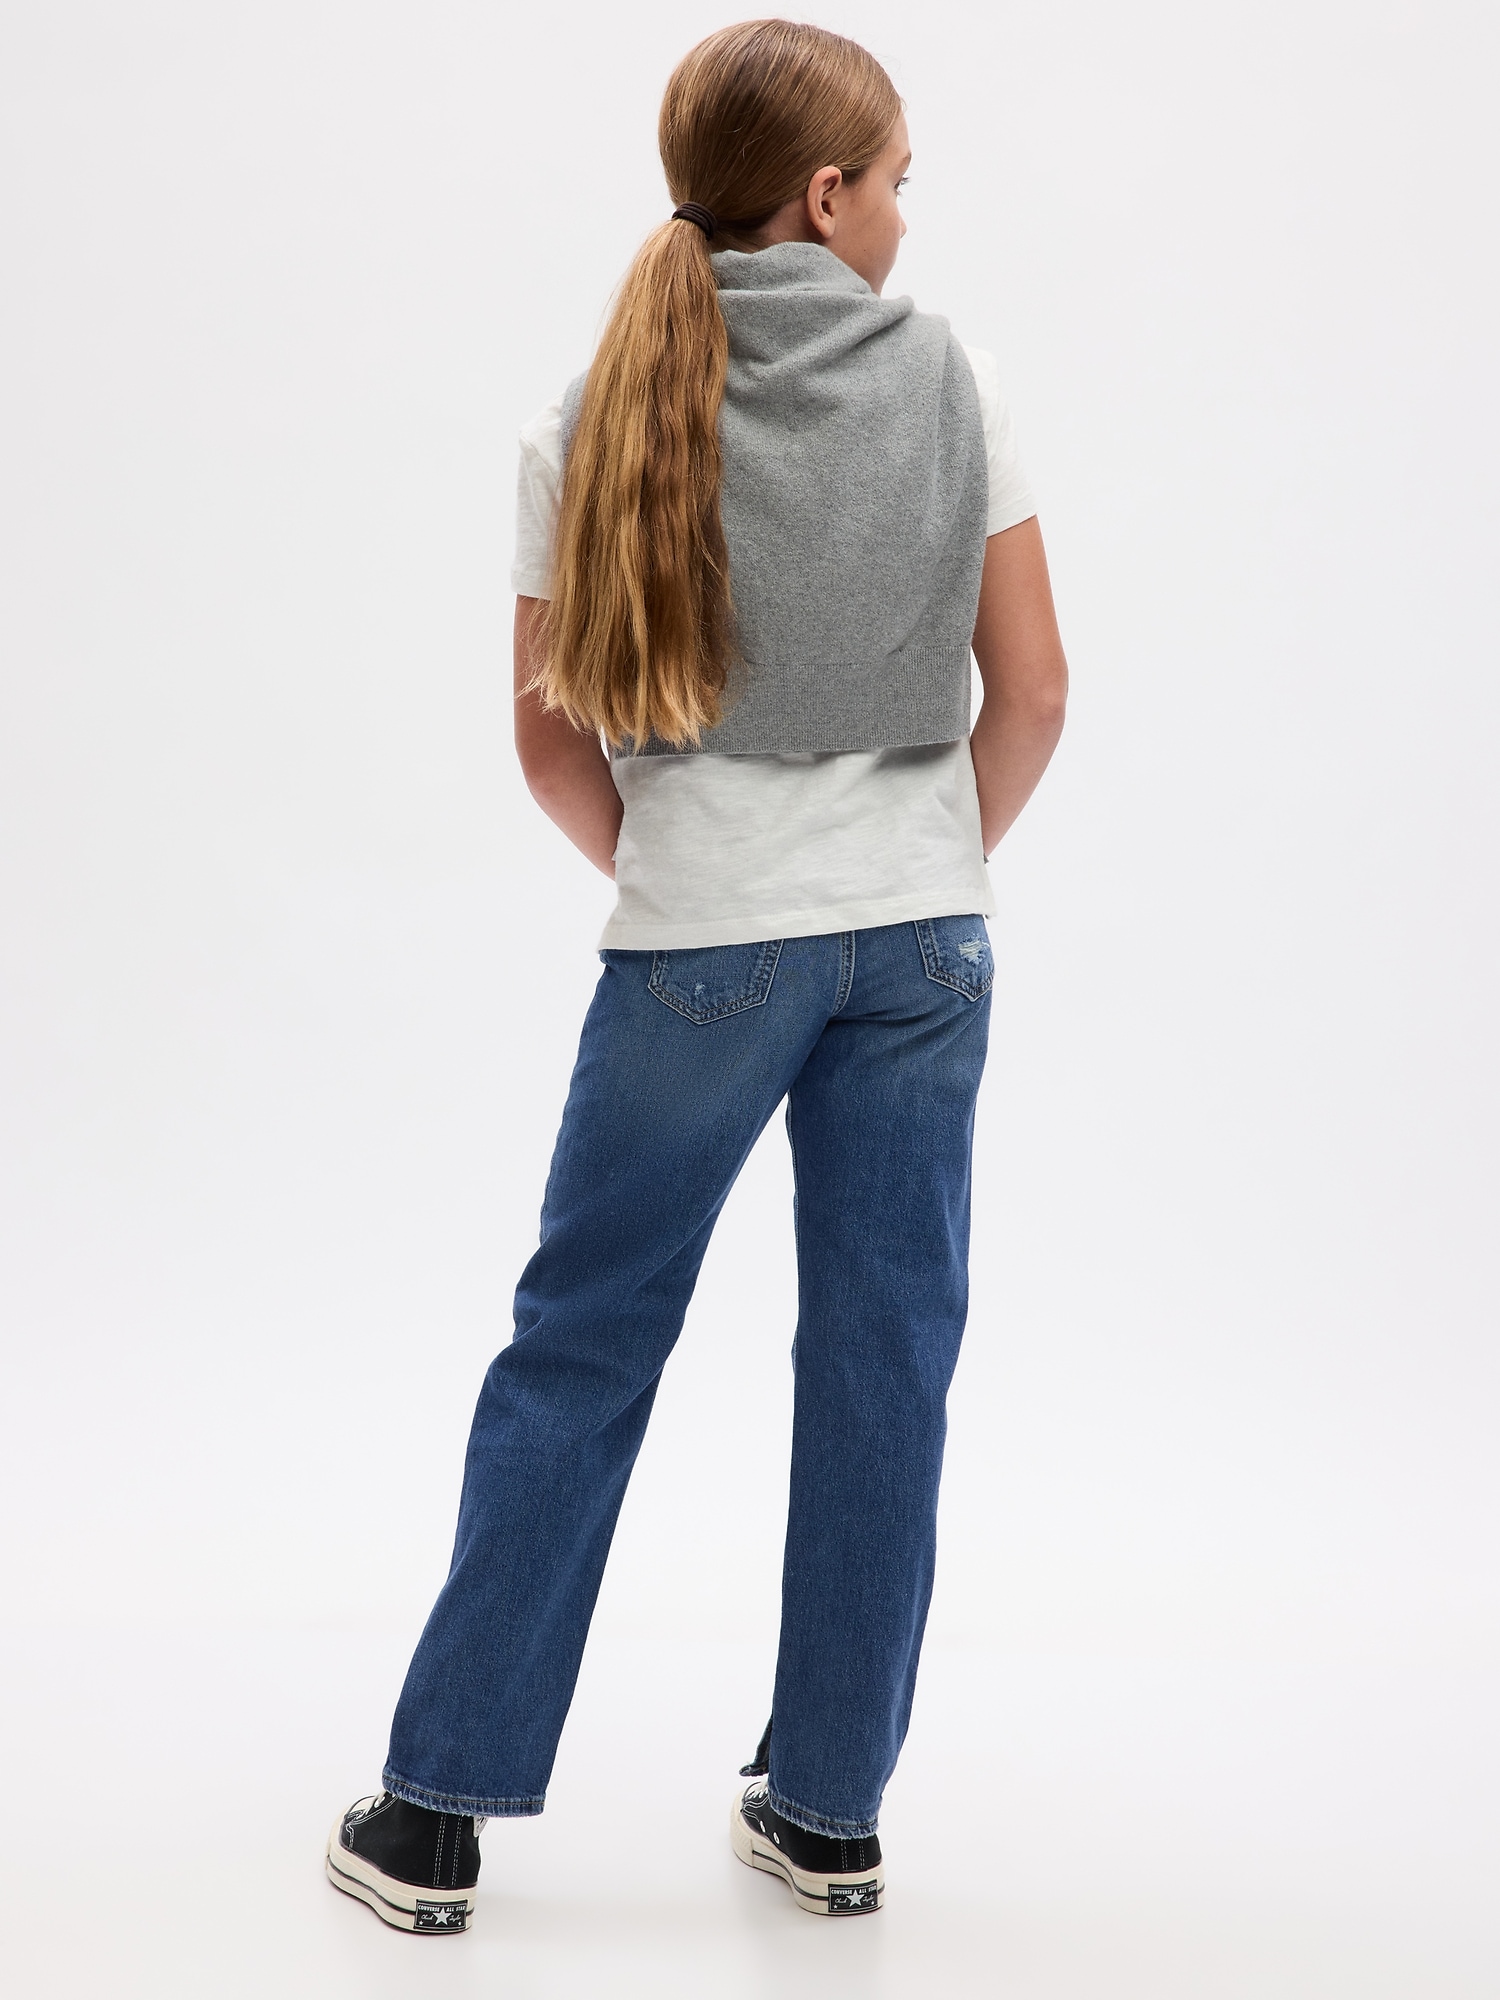 Men's Organic Cotton '90s Loose Jeans by Gap Dark Wash Size 34W